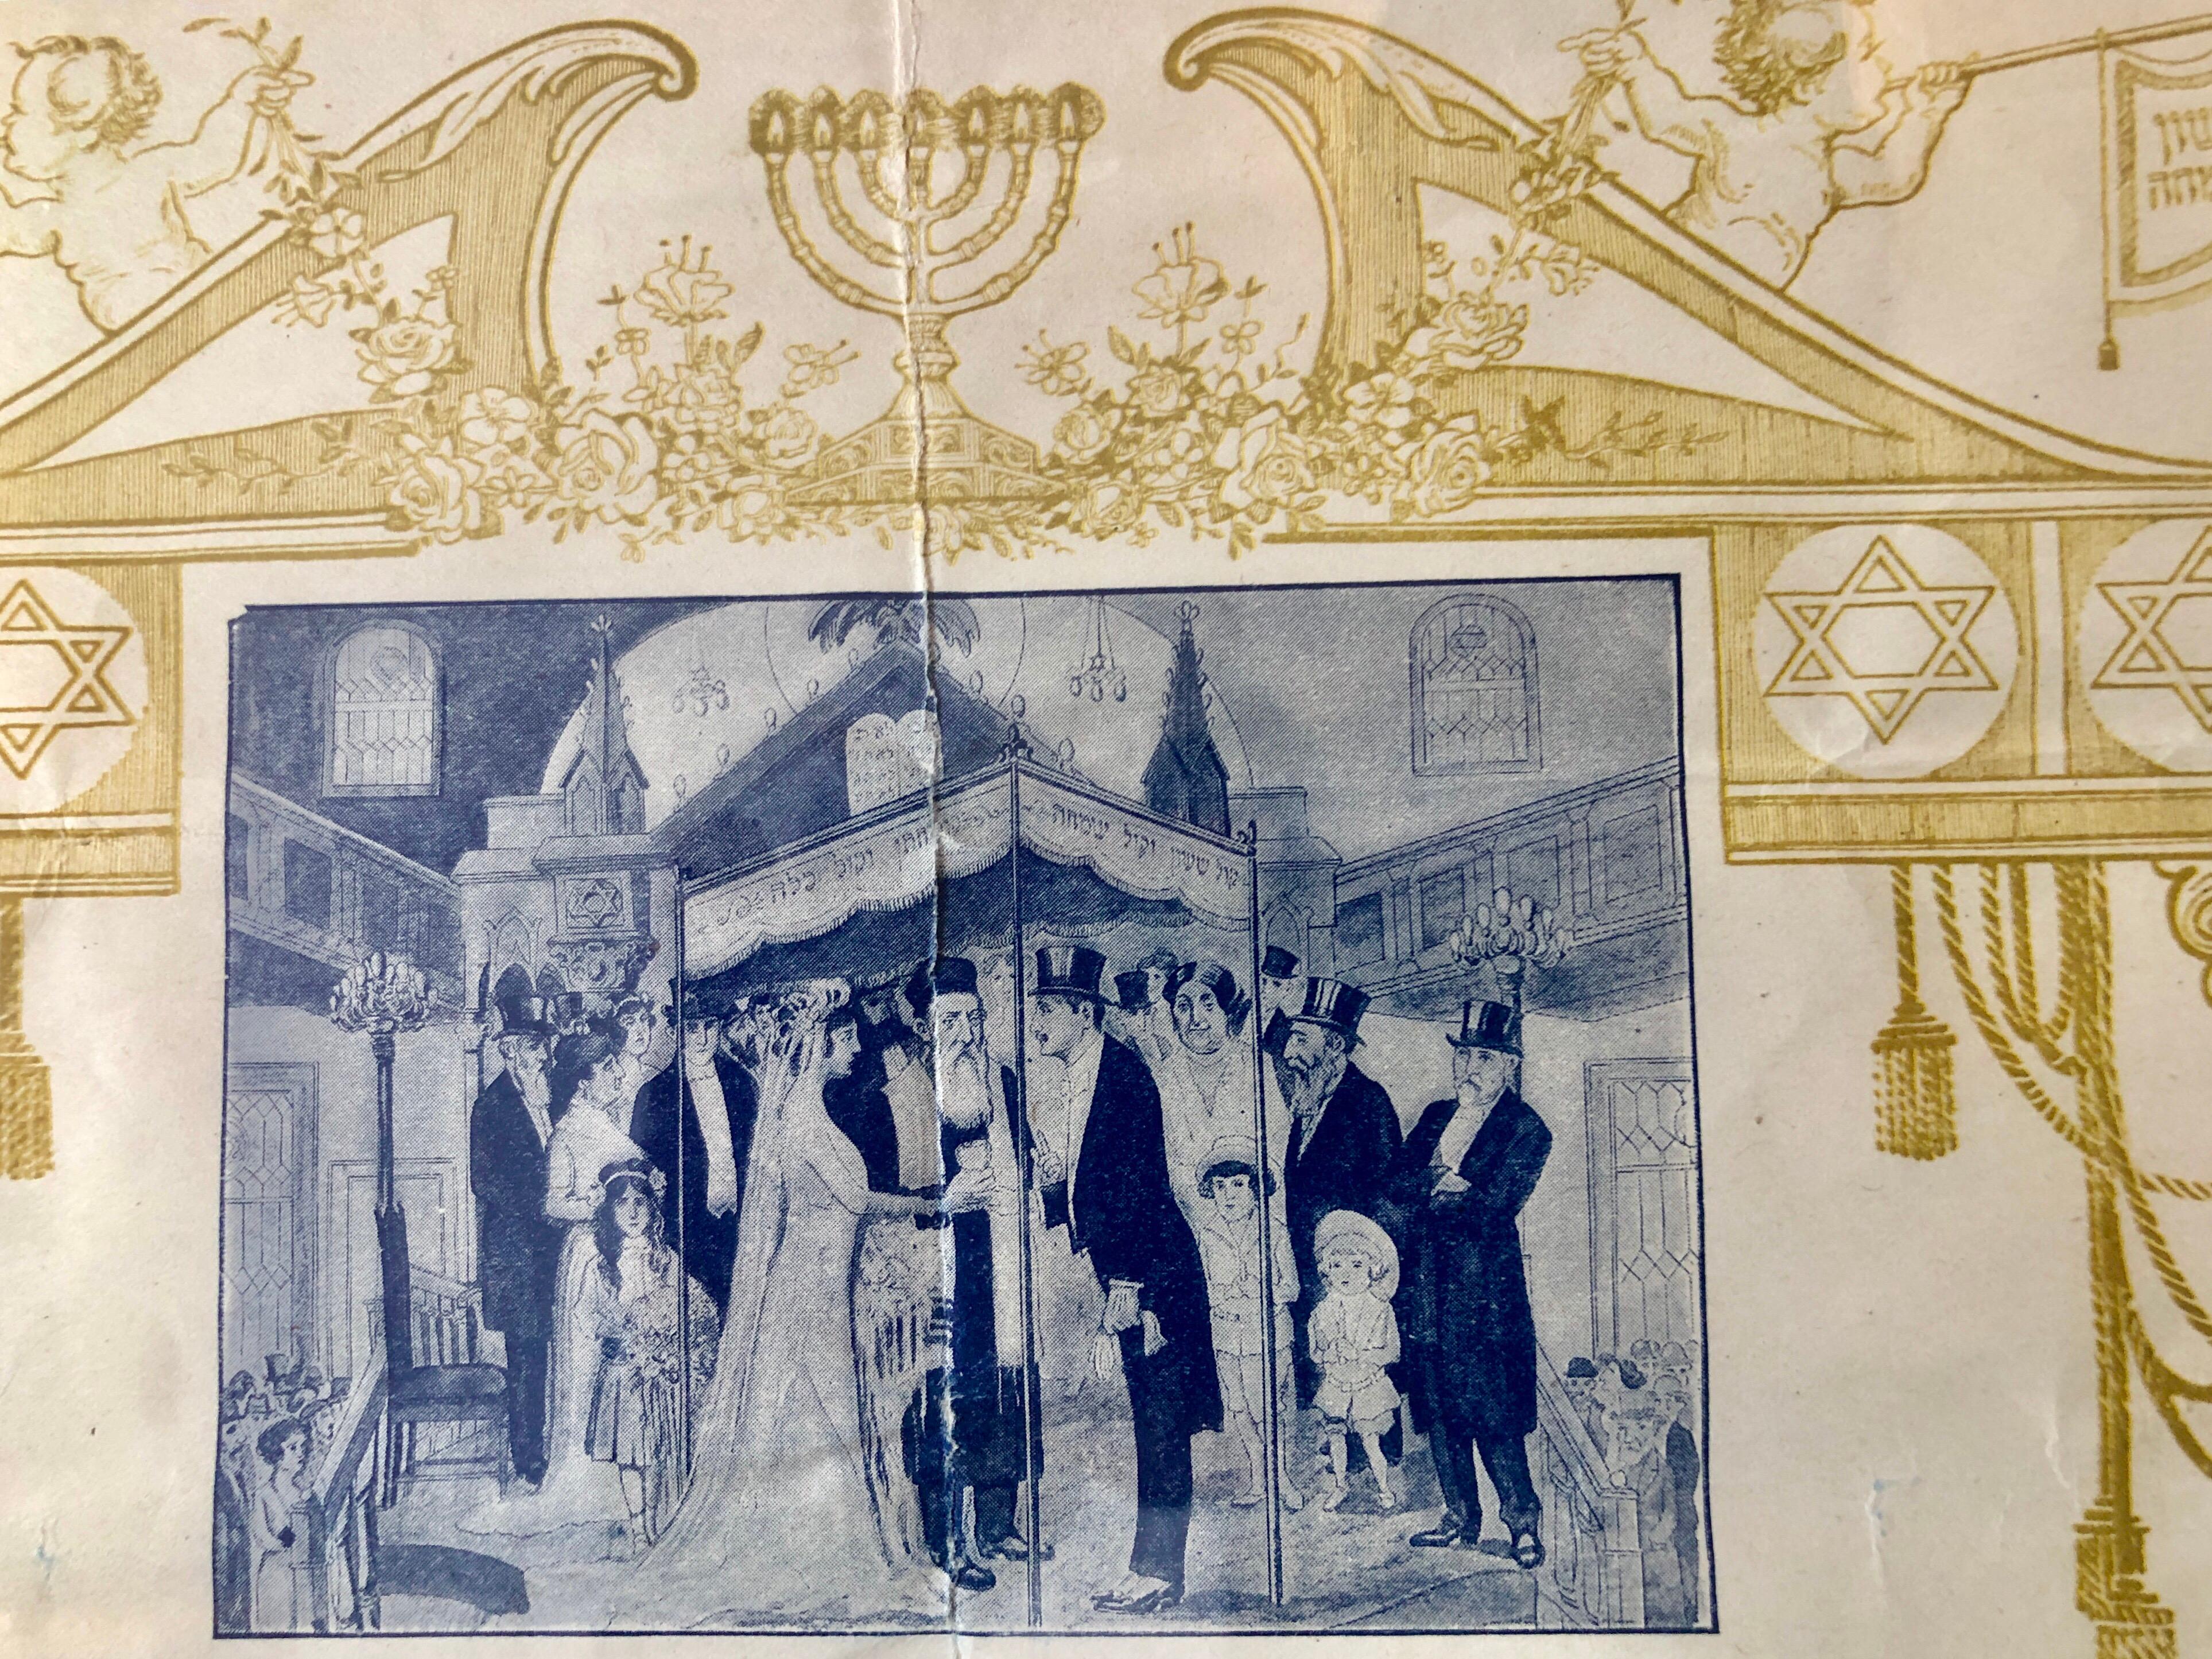 Rare 1915 Early 20c Century Ketubah Hand Written Text NYC Hebrew Publishing co.  - Gothique Art par Leon Israel (Lola)